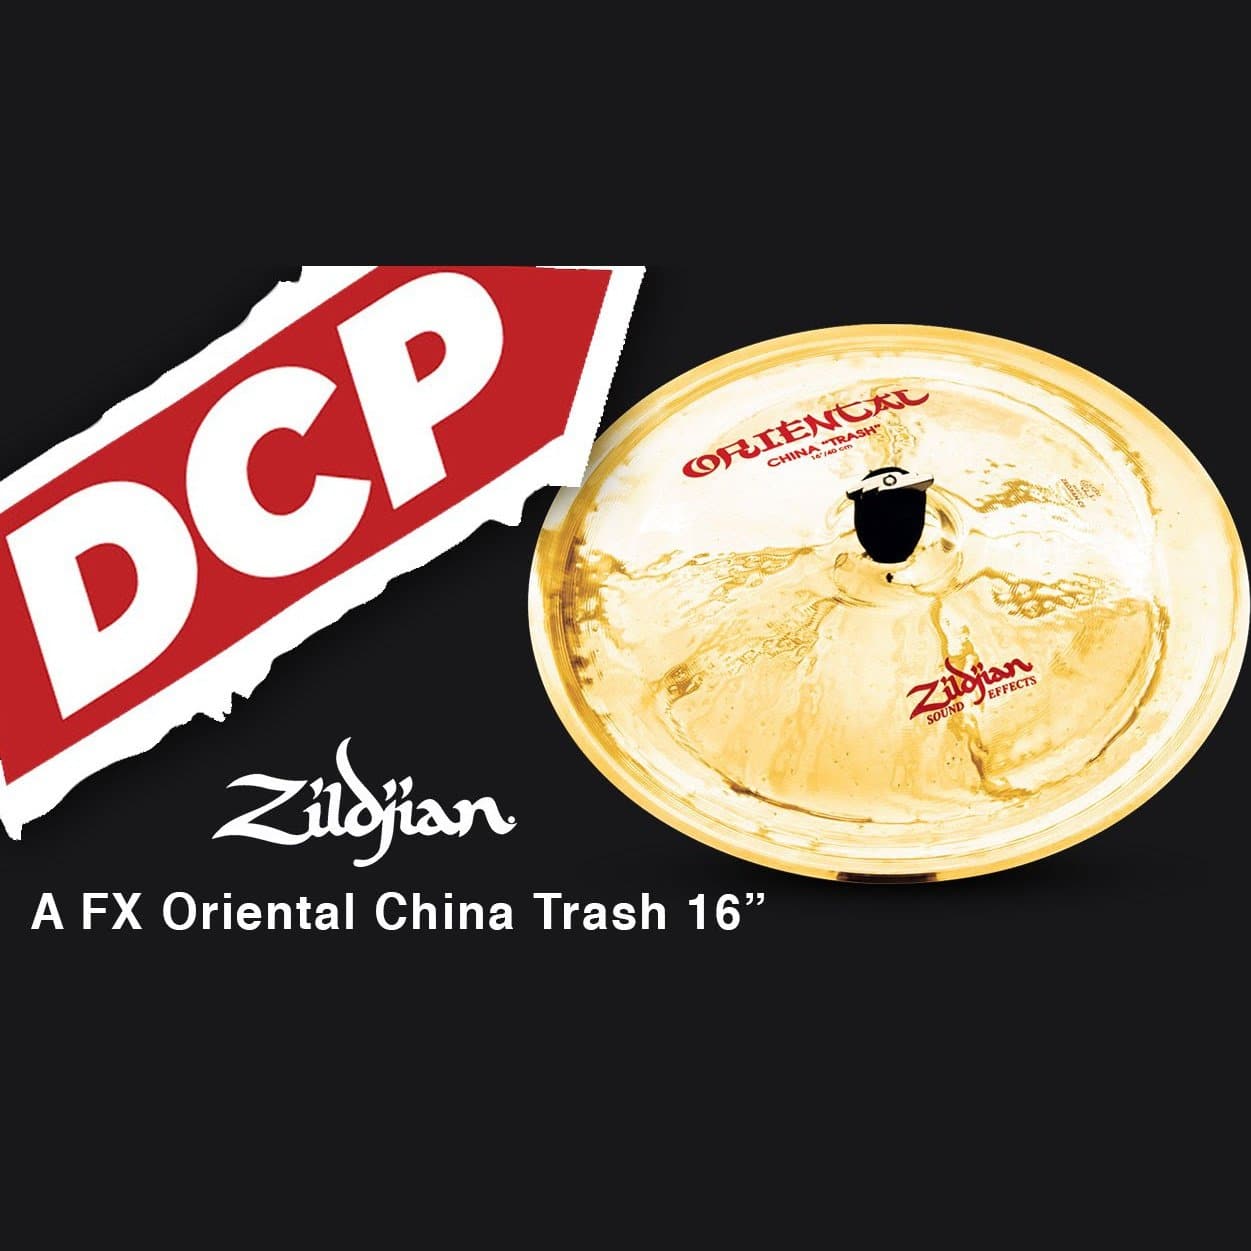 Zildjian FX Oriental China Trash Cymbal 16